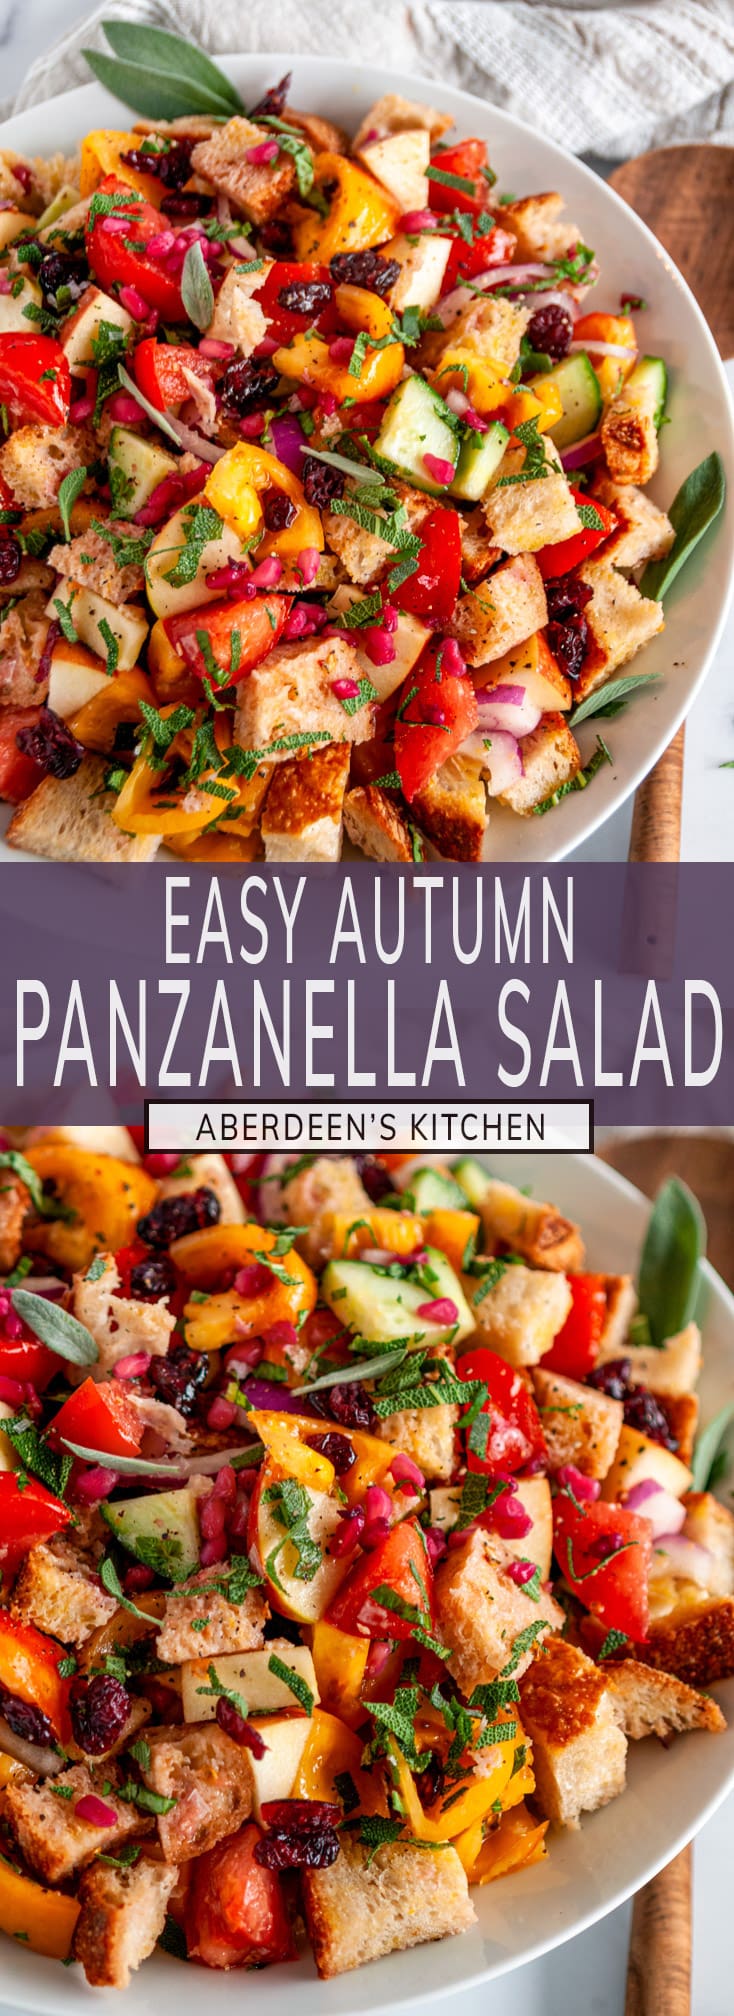 Autumn Panzanella Salad - Aberdeen's Kitchen